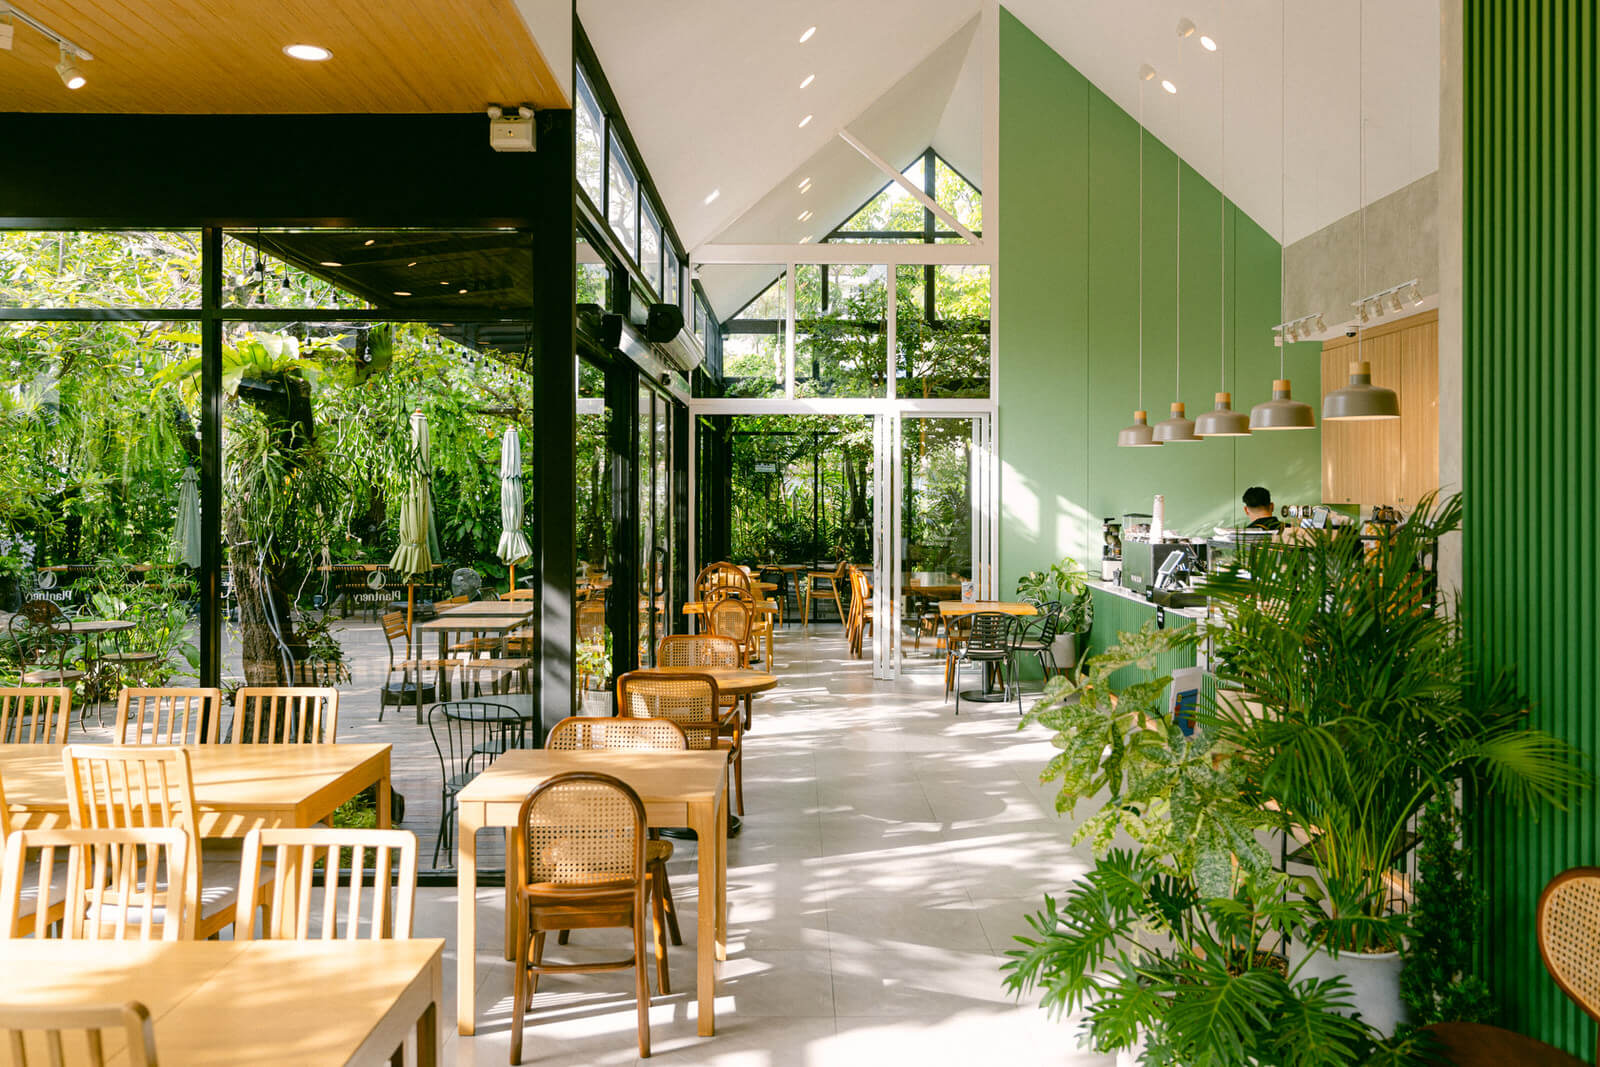 plantnery green café